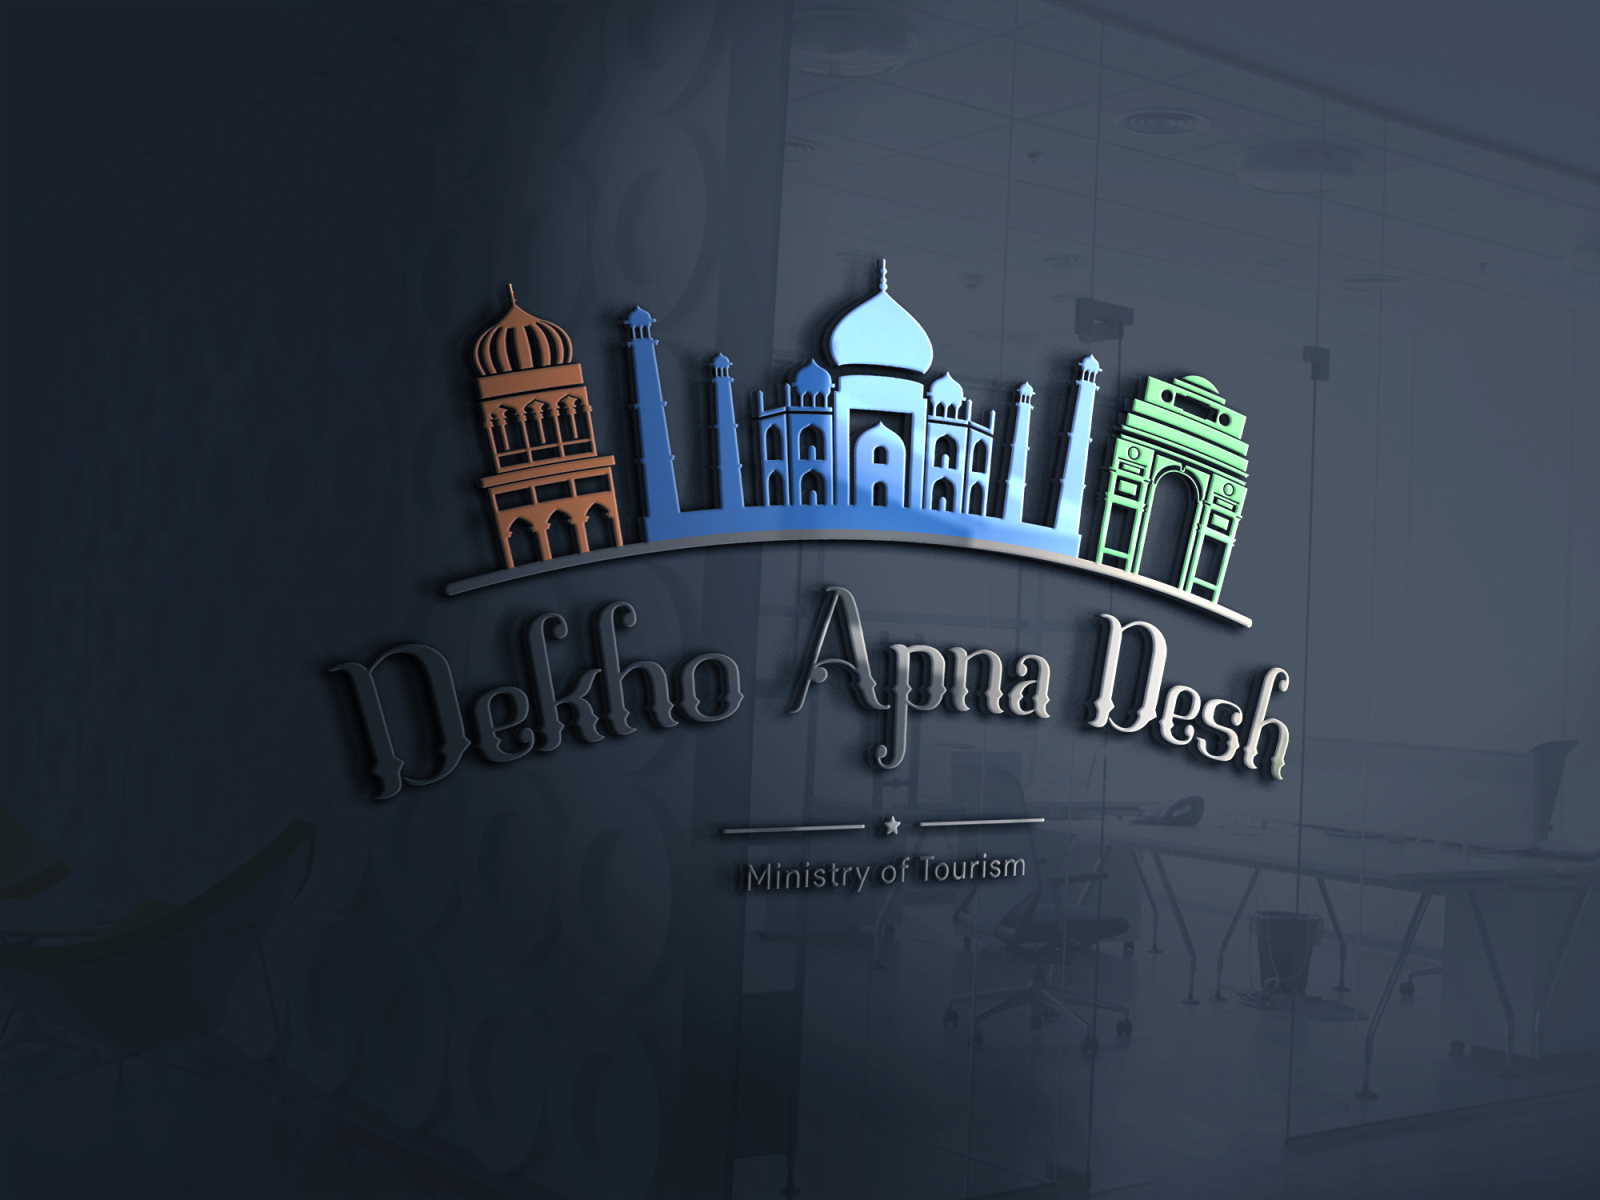 Dekho Apna Desh Logo Competition by Jenish Dhanani on Dribbble